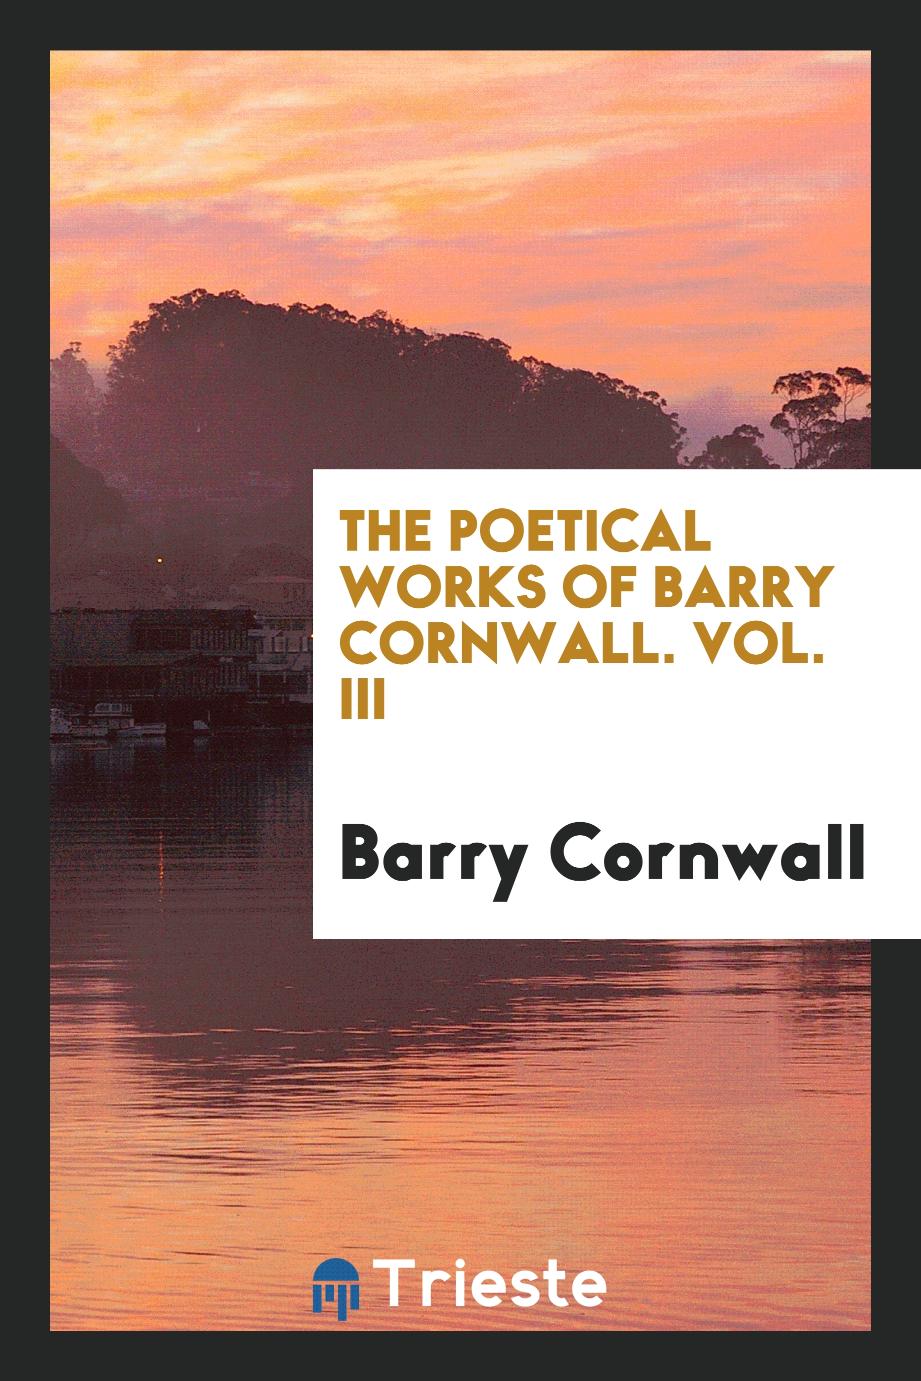 The poetical works of Barry Cornwall. Vol. III